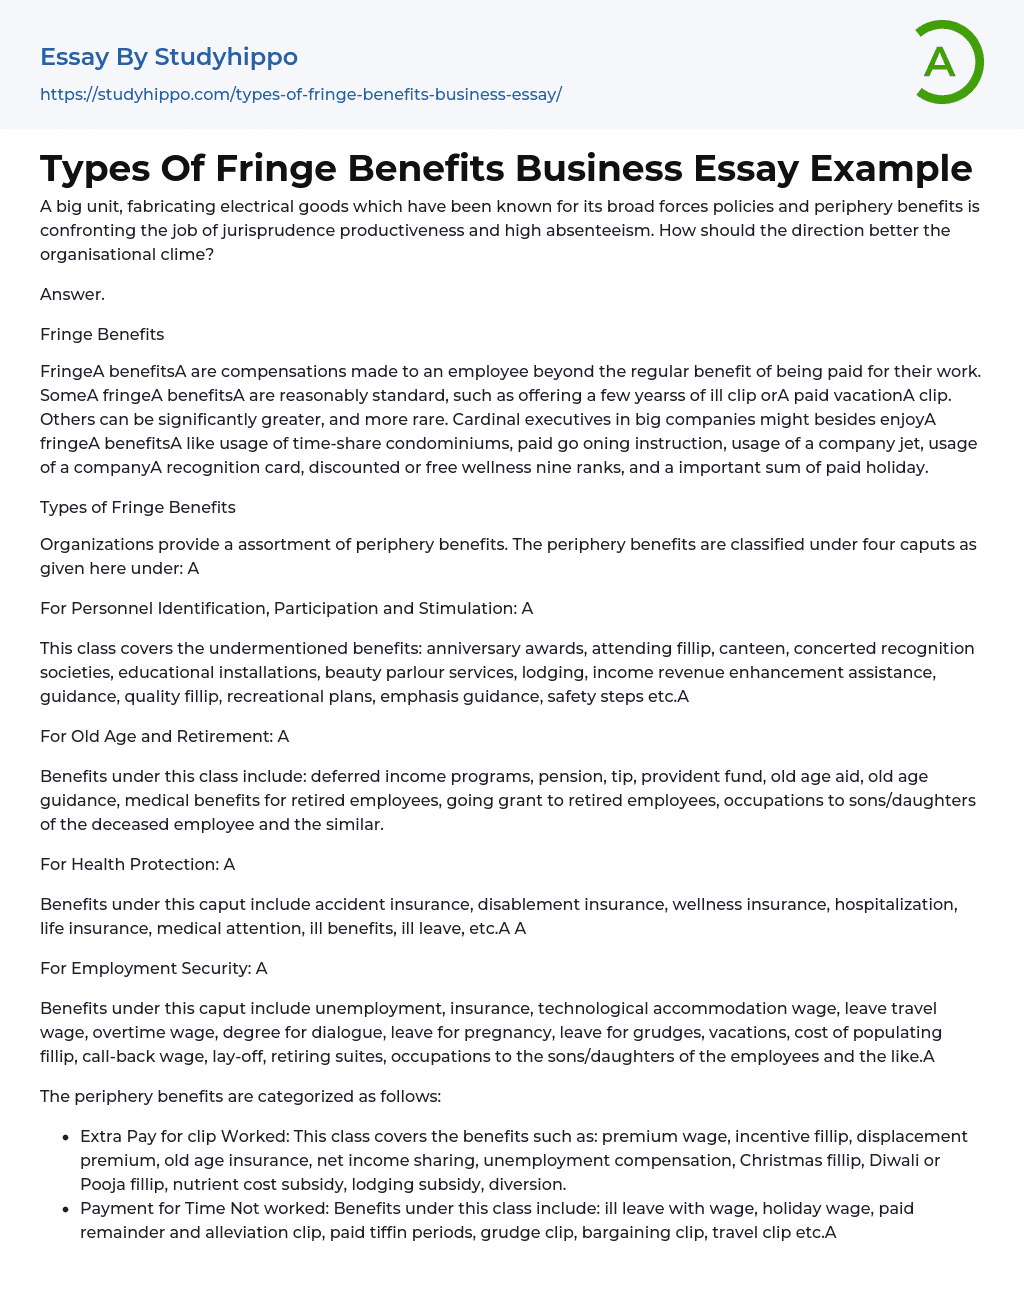 Types Of Fringe Benefits Business Essay Example